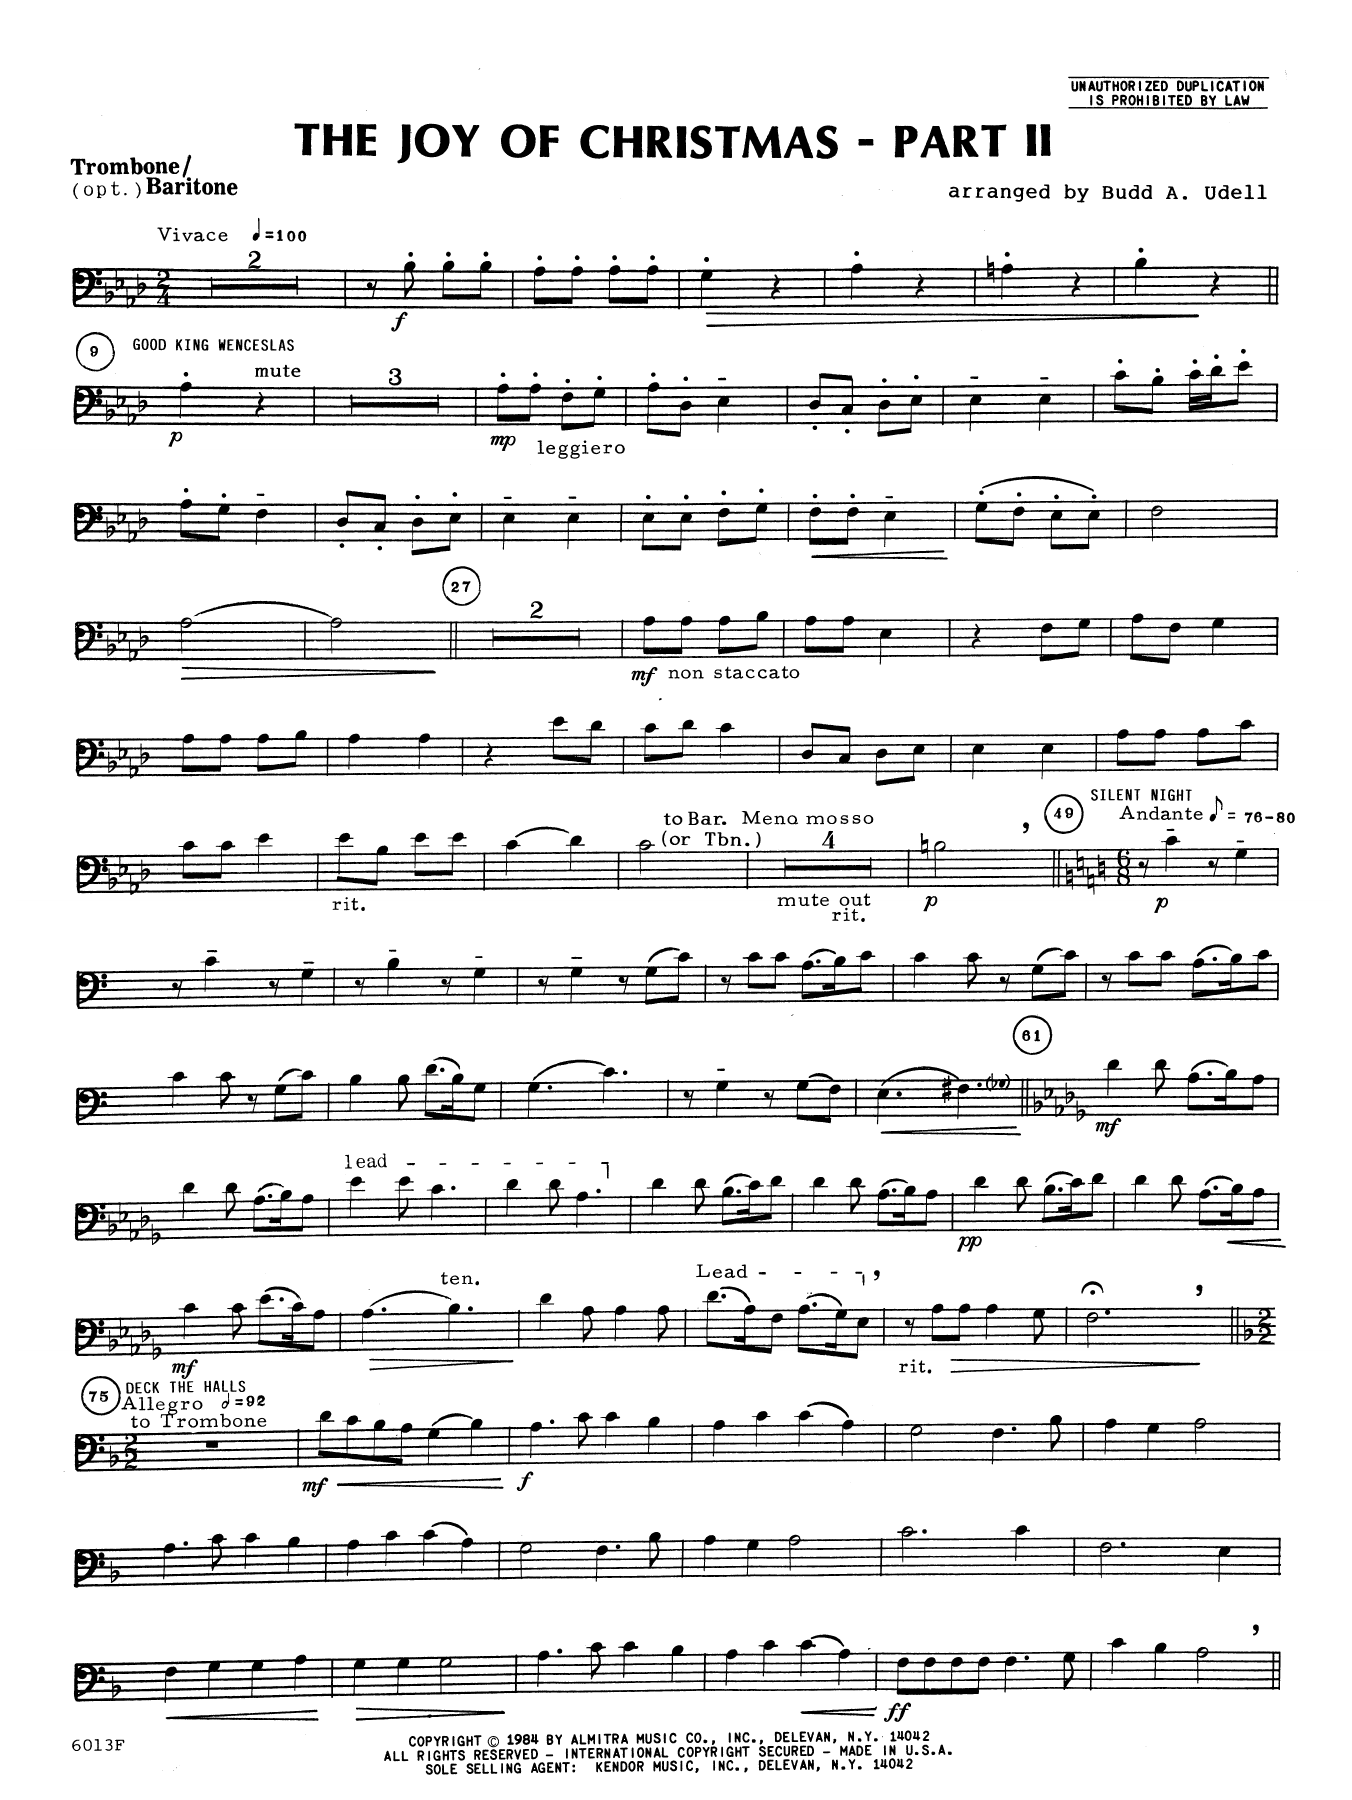 Download Budd A. Udell The Joy of Christmas Part 2 - Trombone Sheet Music